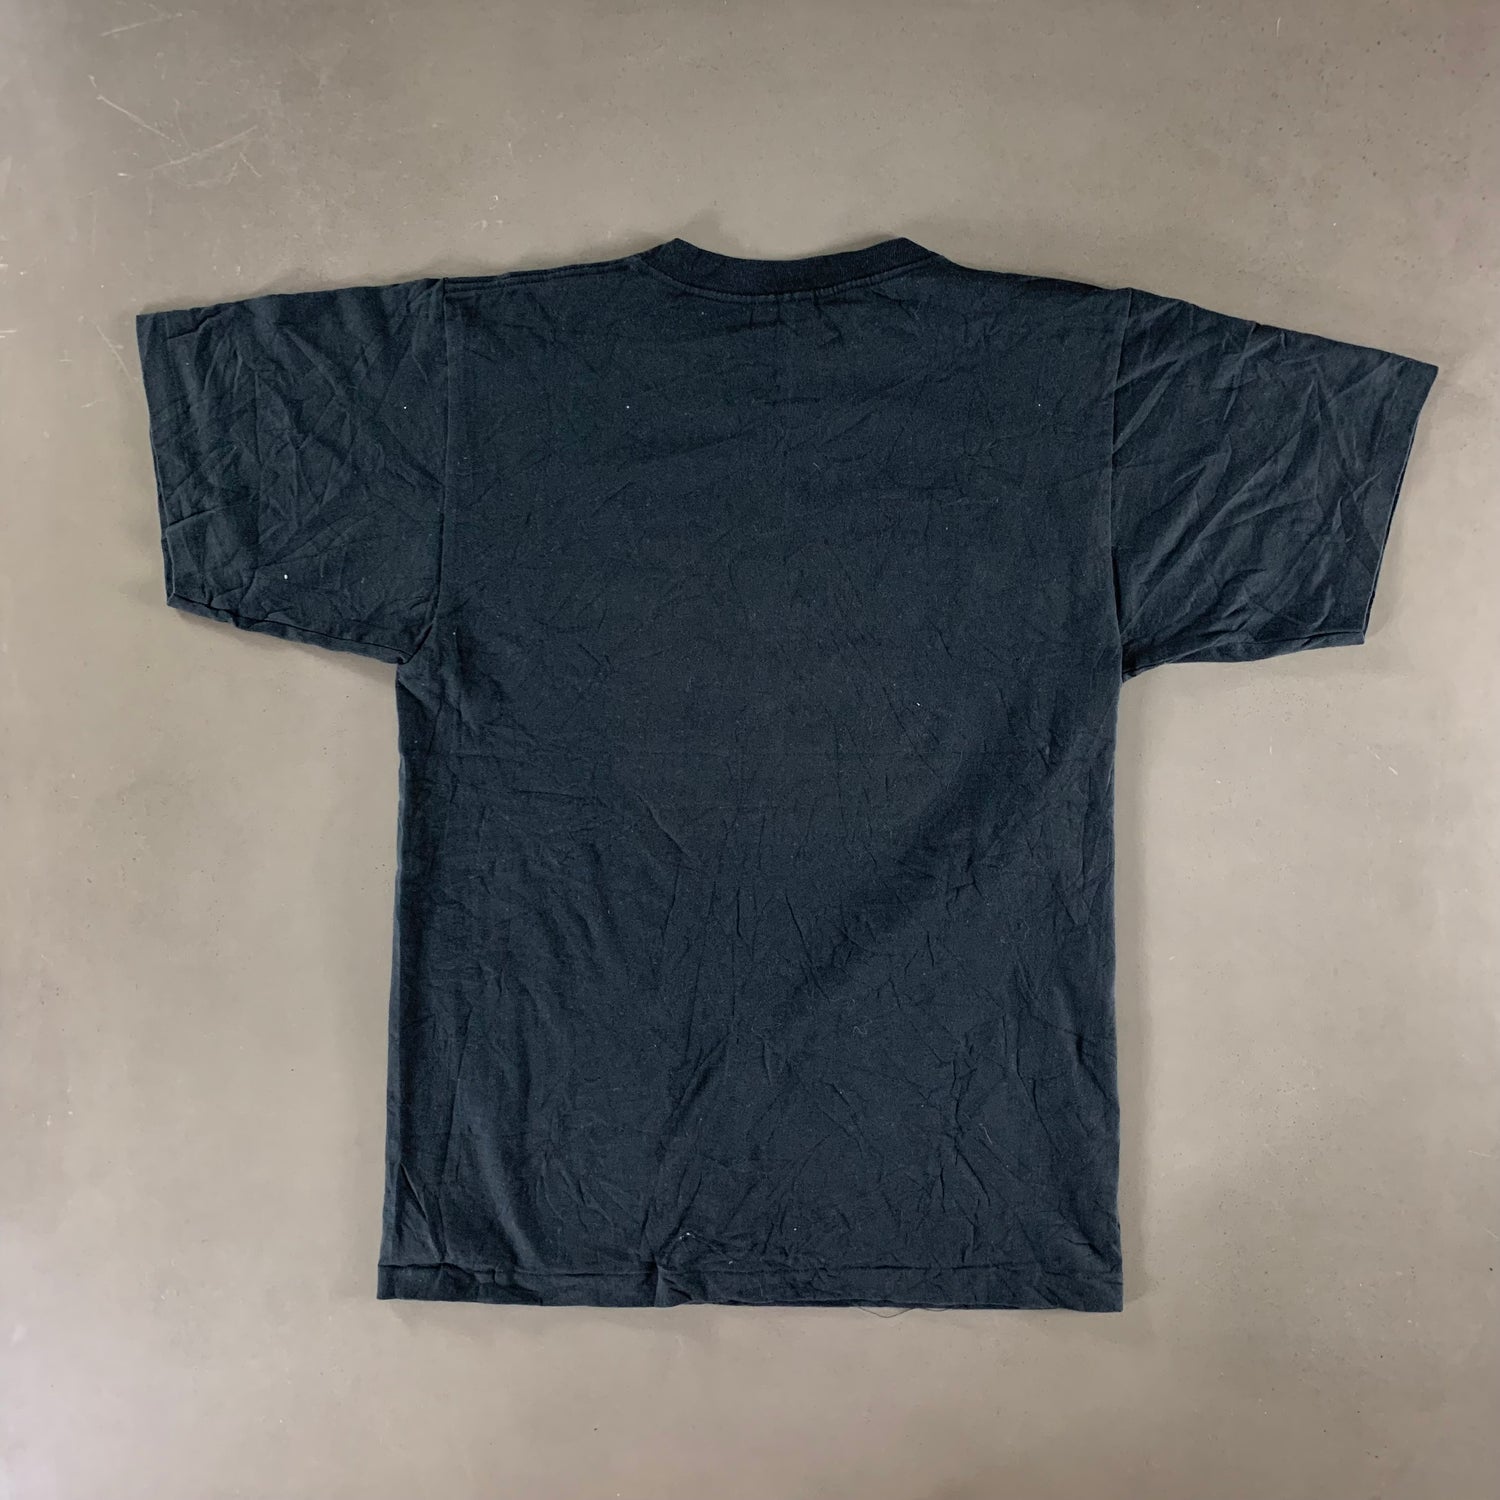 Vintage 1995 Dolphin T-shirt size Medium